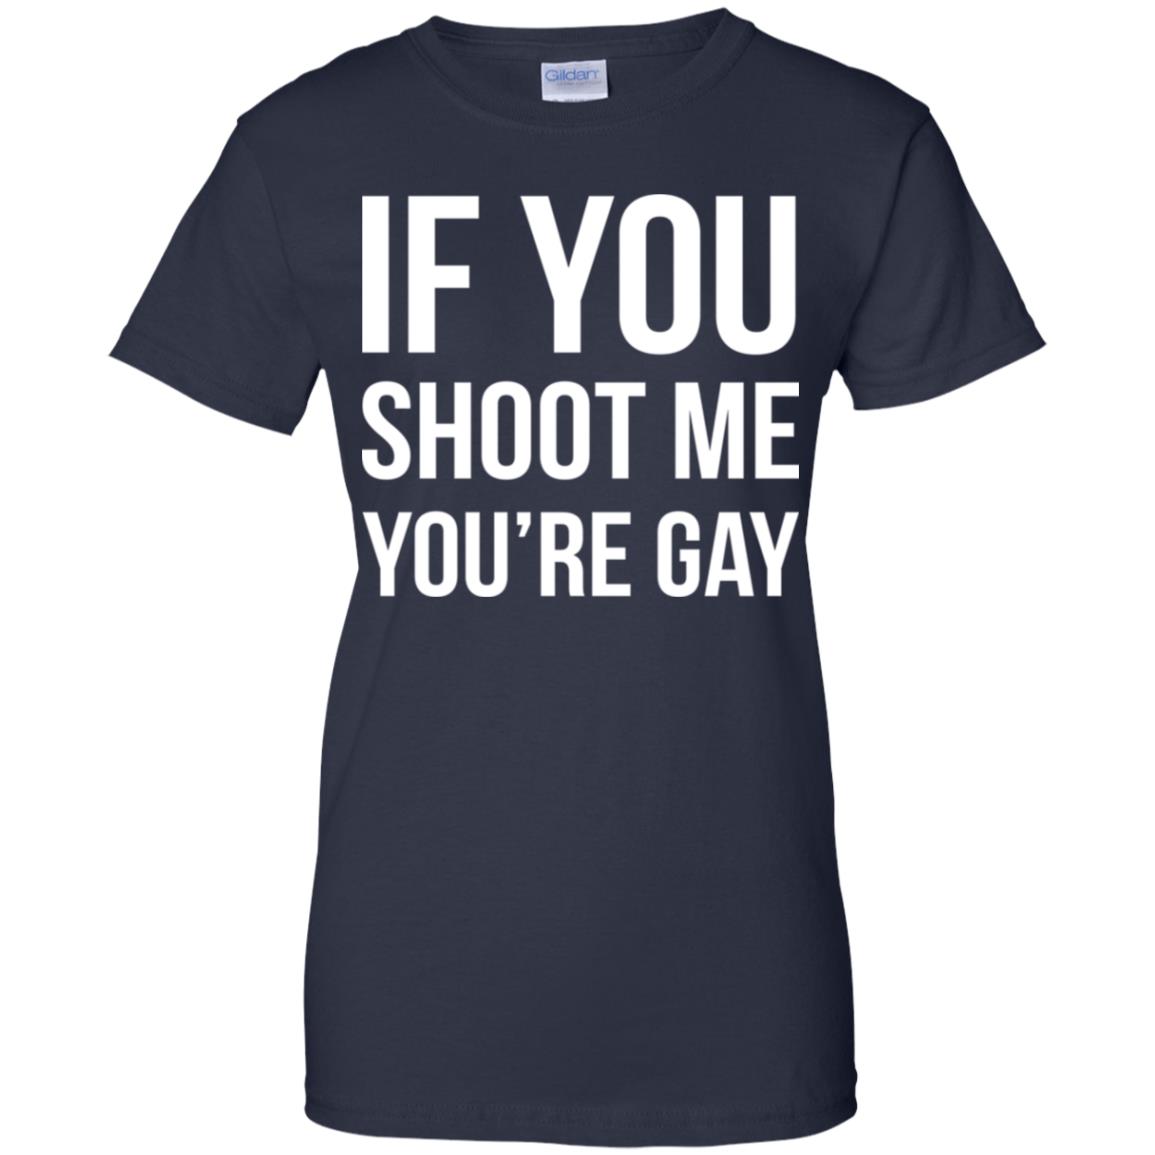 jeg behøver skrot patologisk If you shoot me you're gay shirt, hoodie, long sleeve